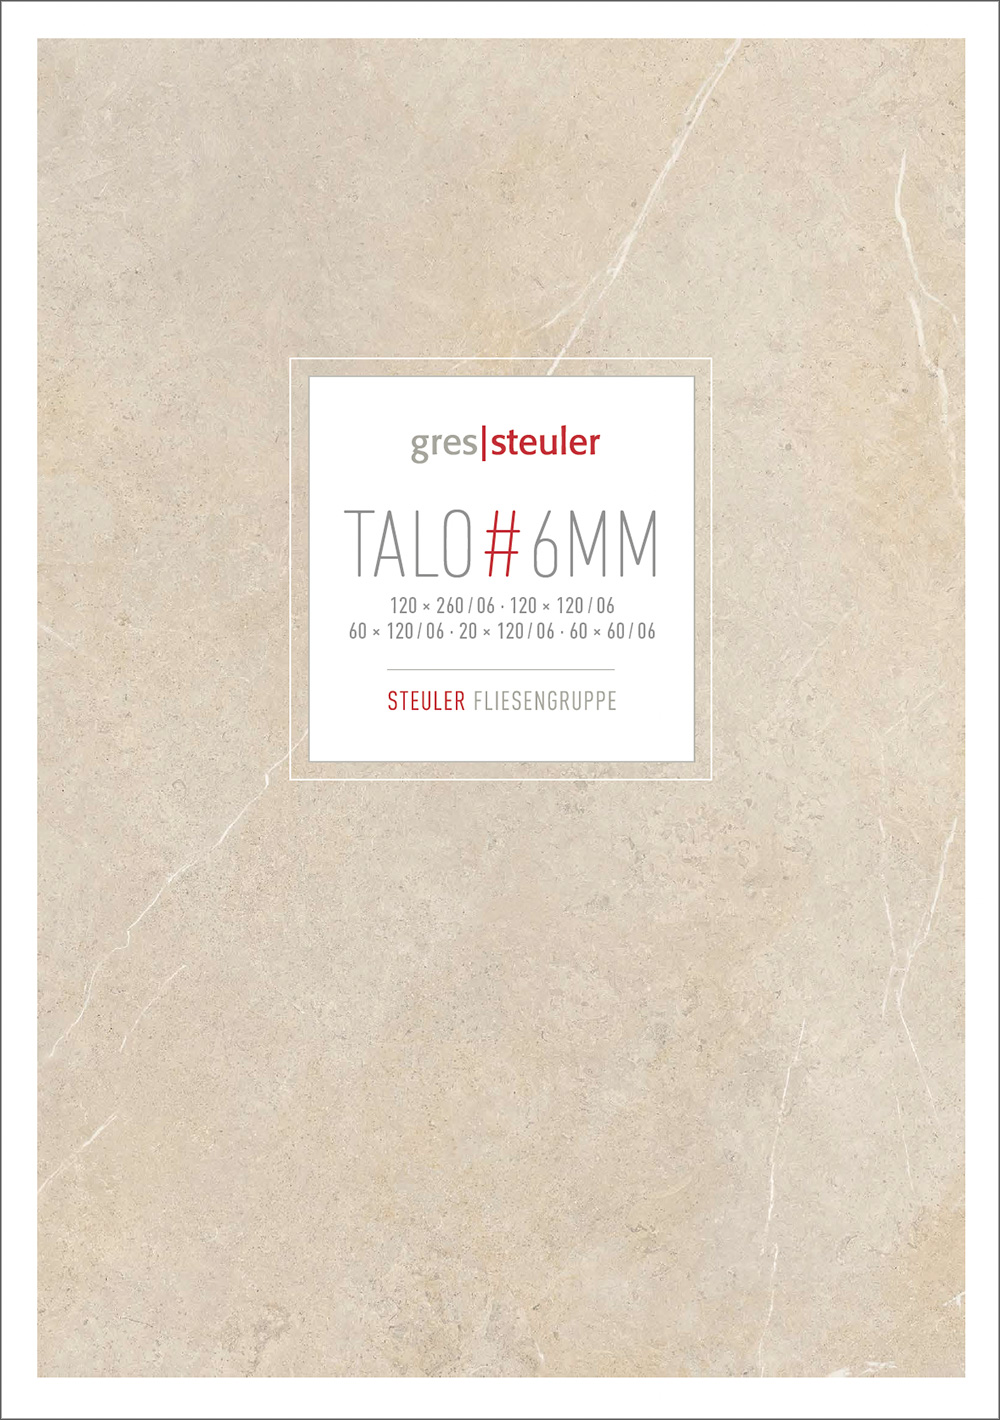 Download Katalog Talo 